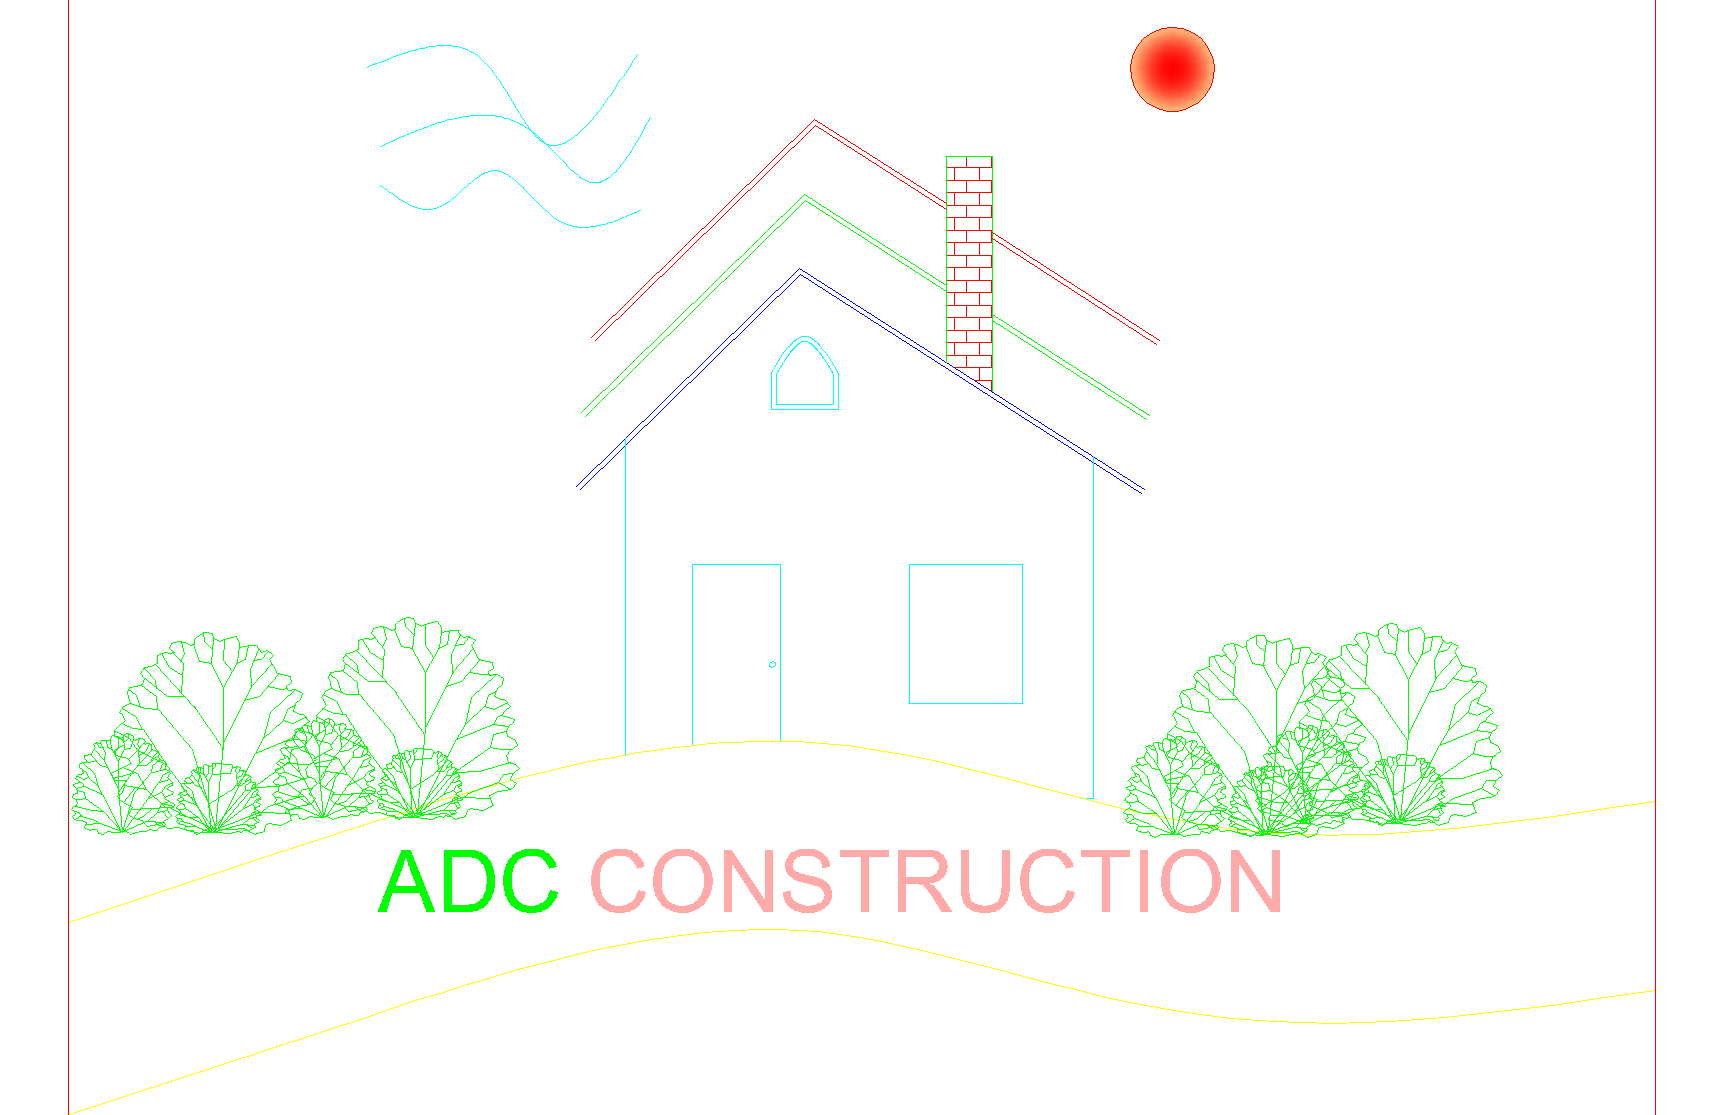  				ADC Construction				